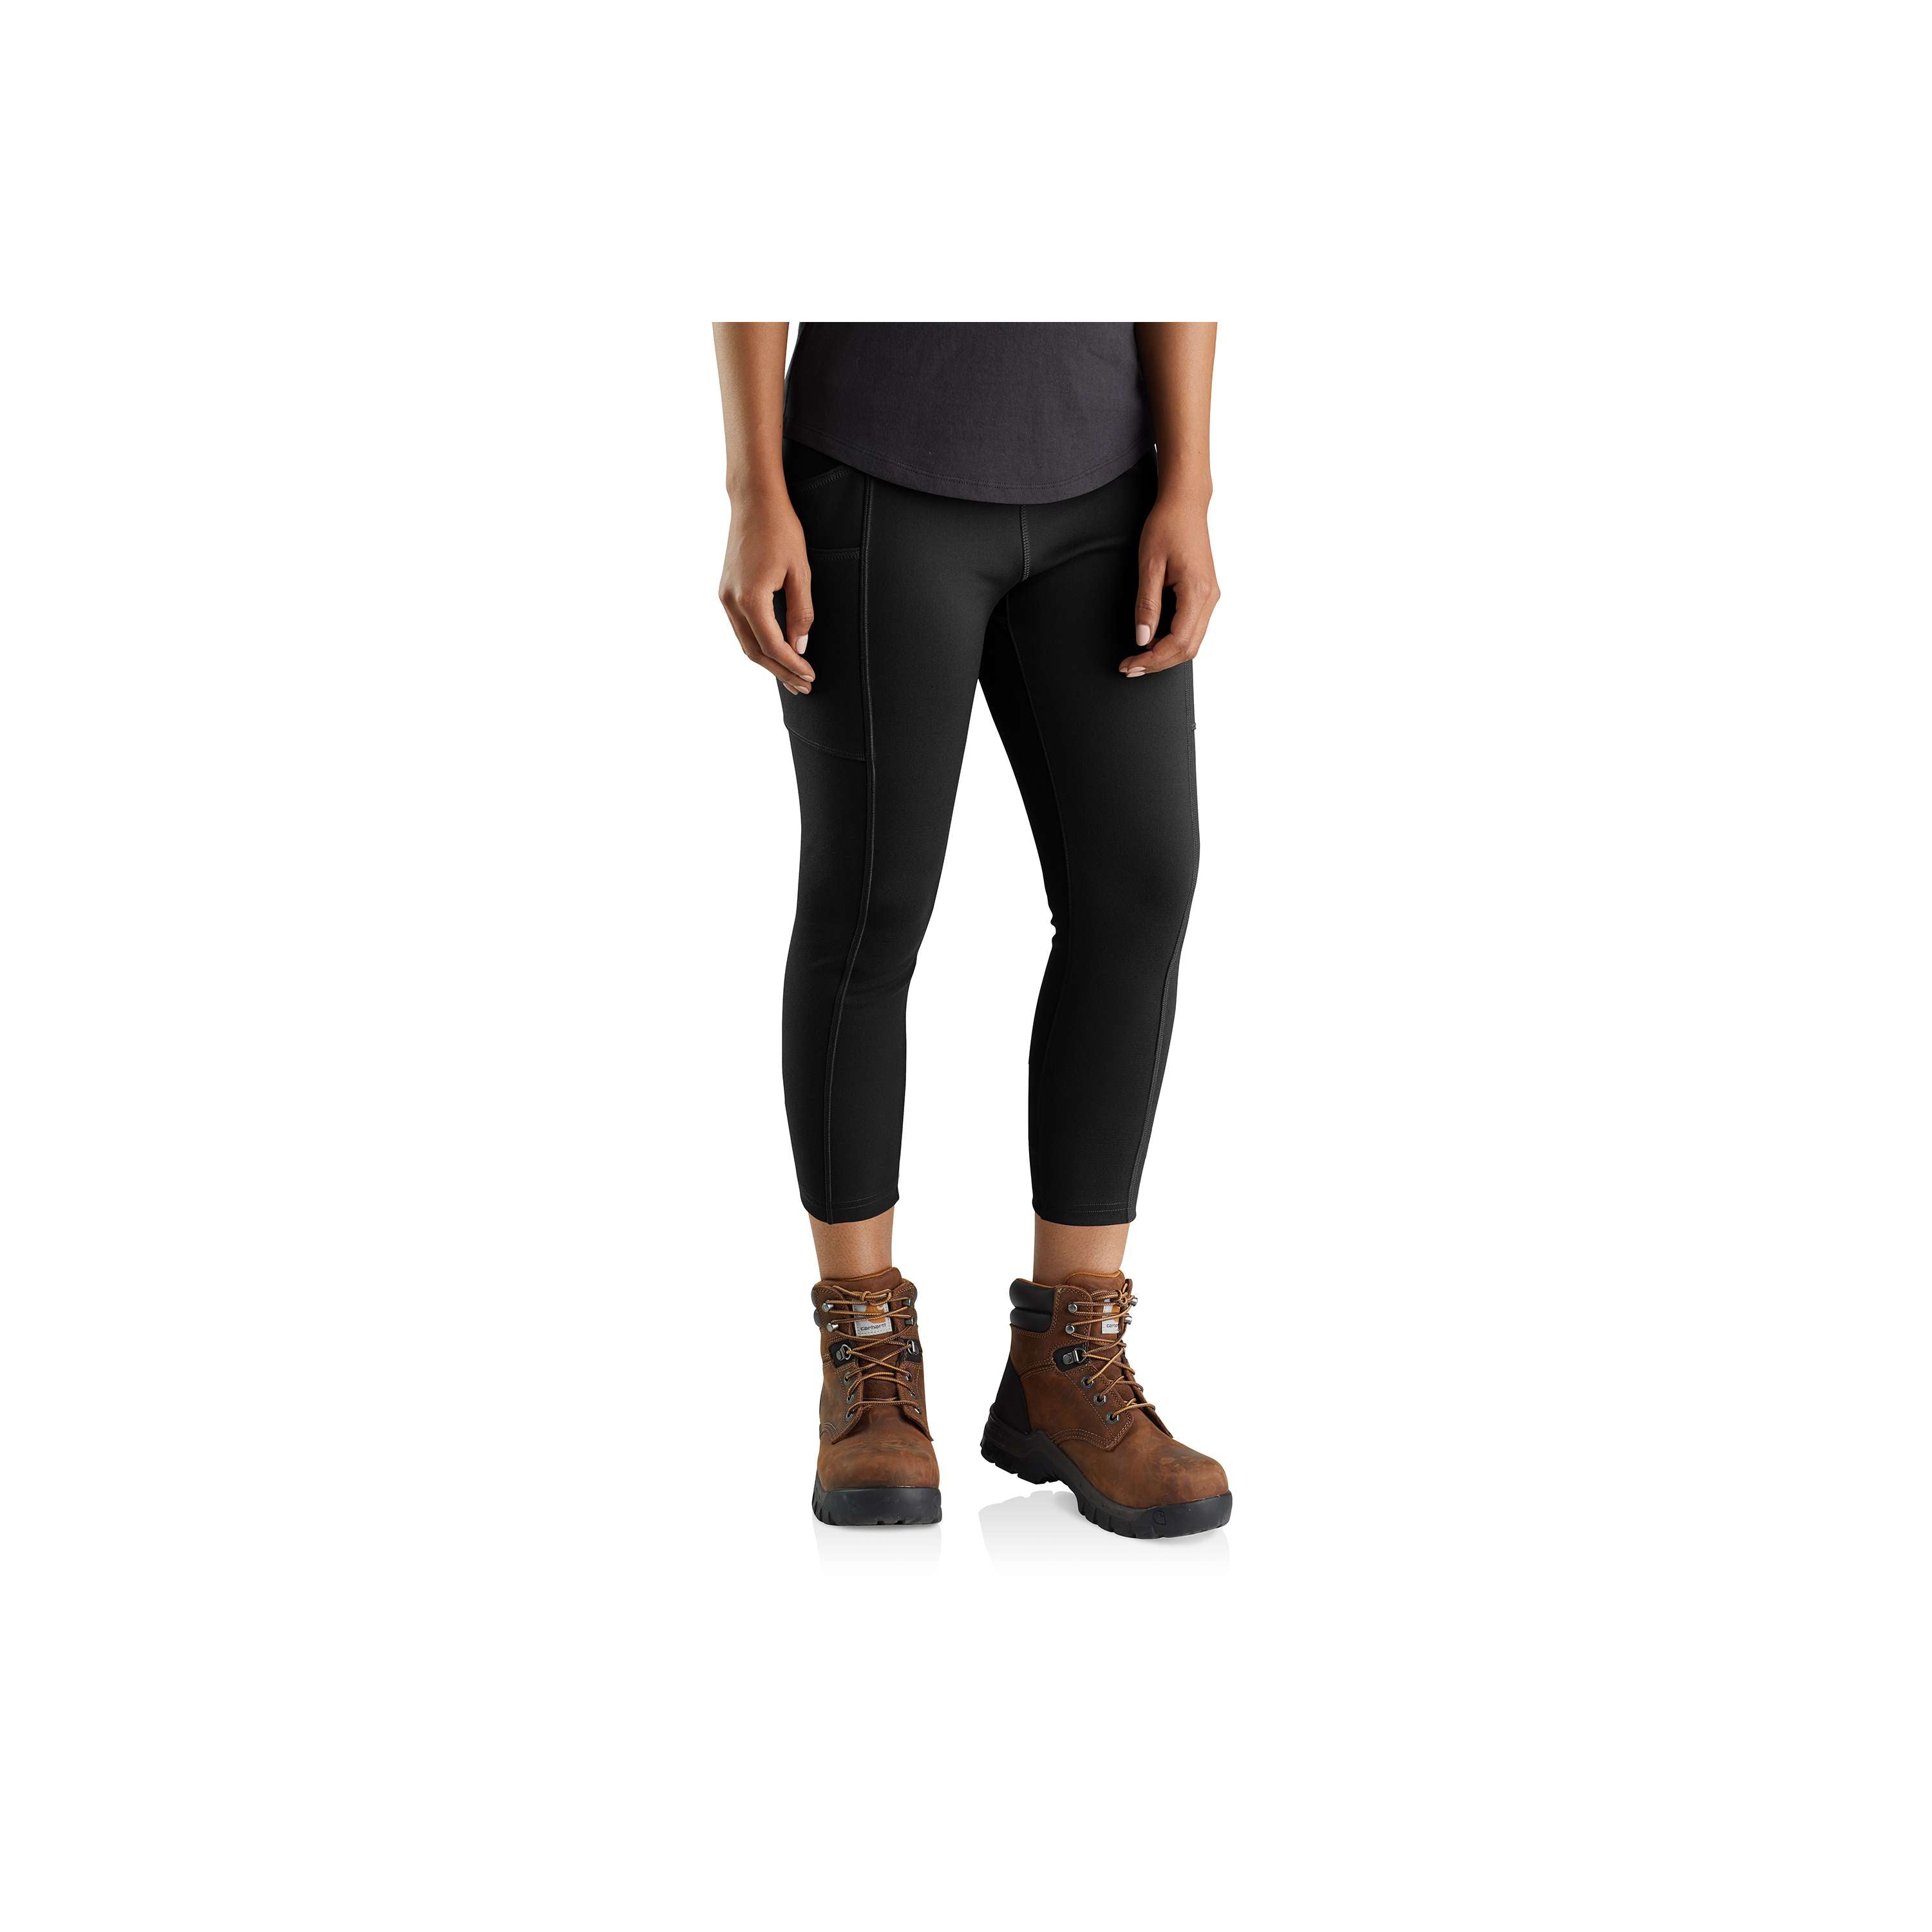 Carhartt Women's Force Stretch Utility Legging (Regular and Plus